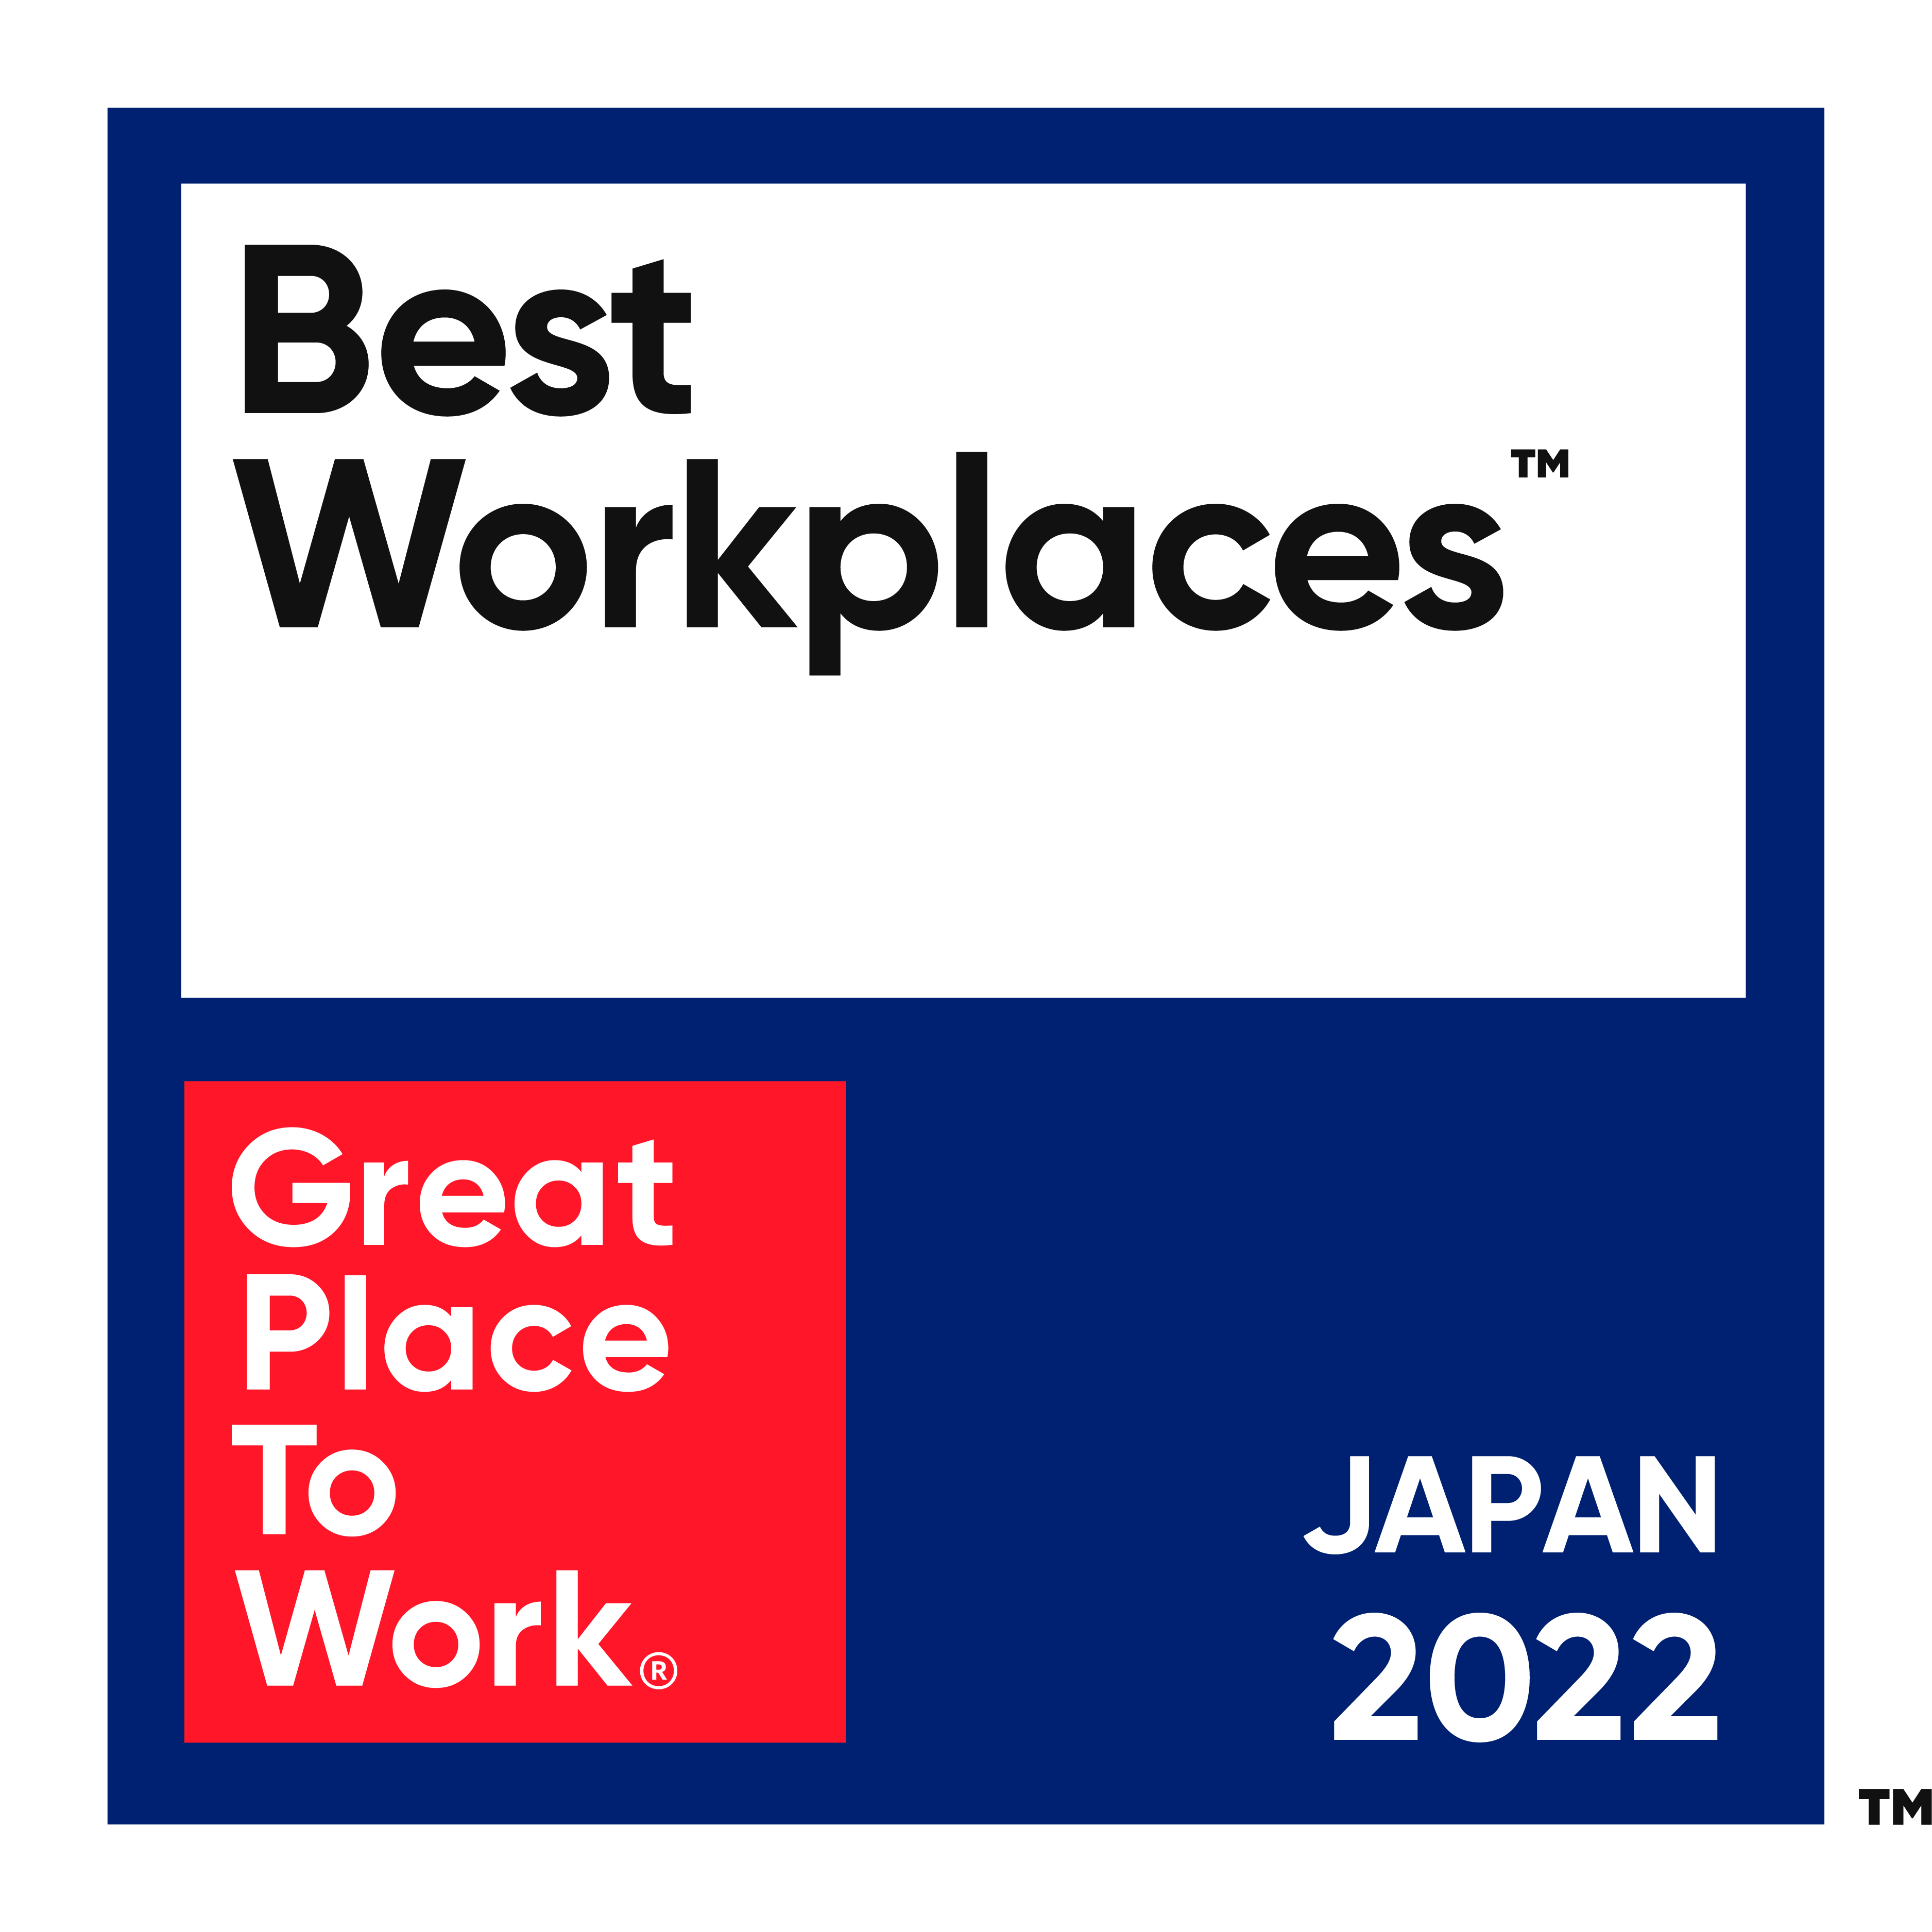 2022_Japan_Best Workplaces